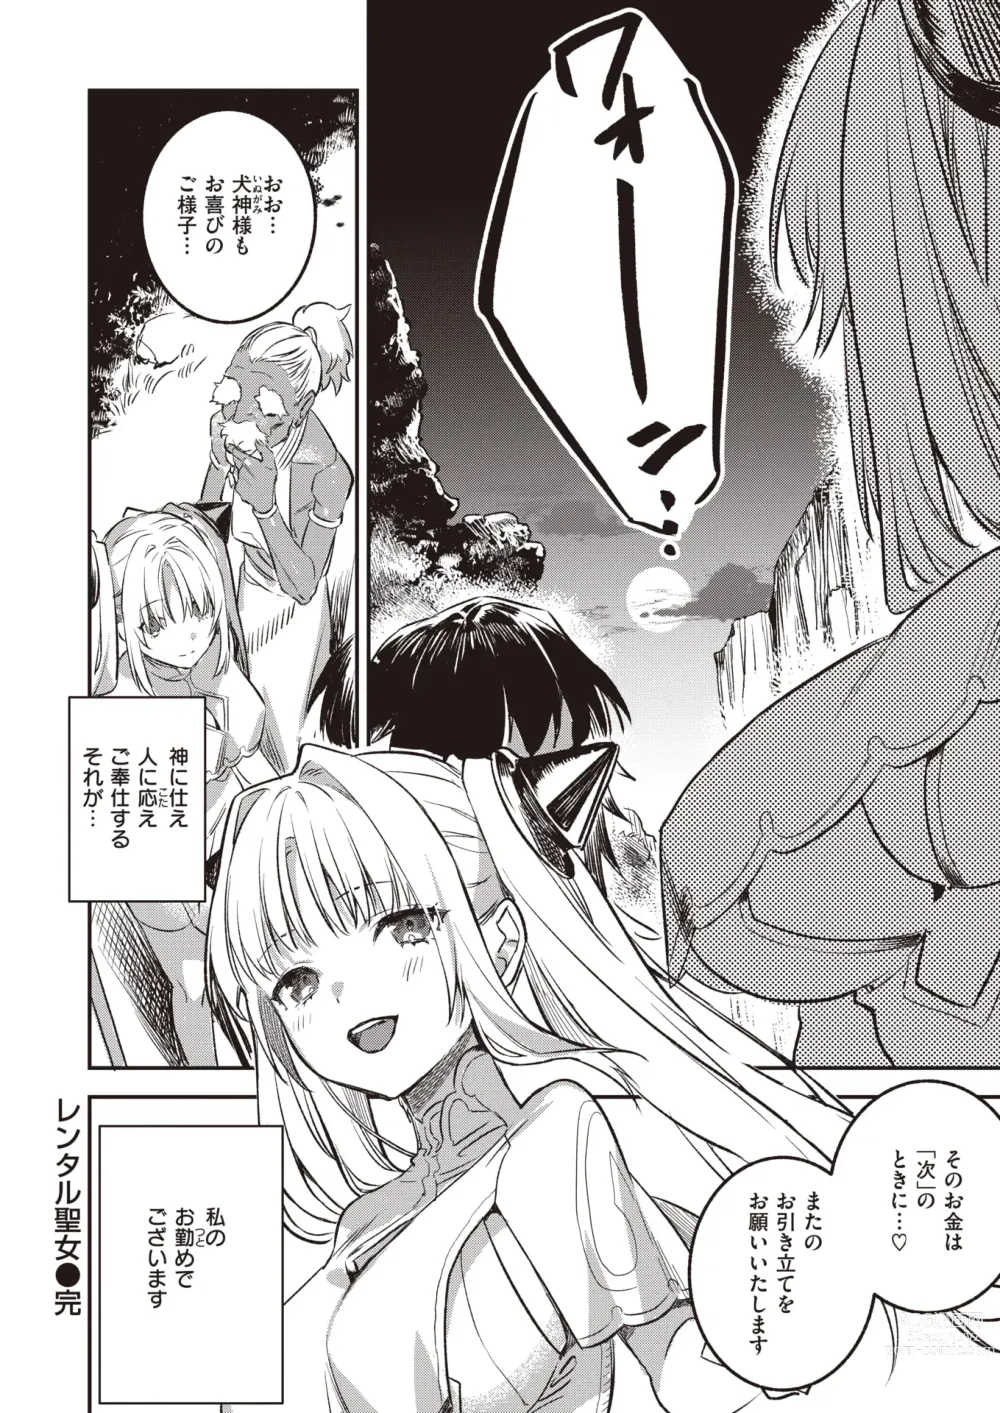 Page 49 of manga Isekai Rakuten Vol. 28